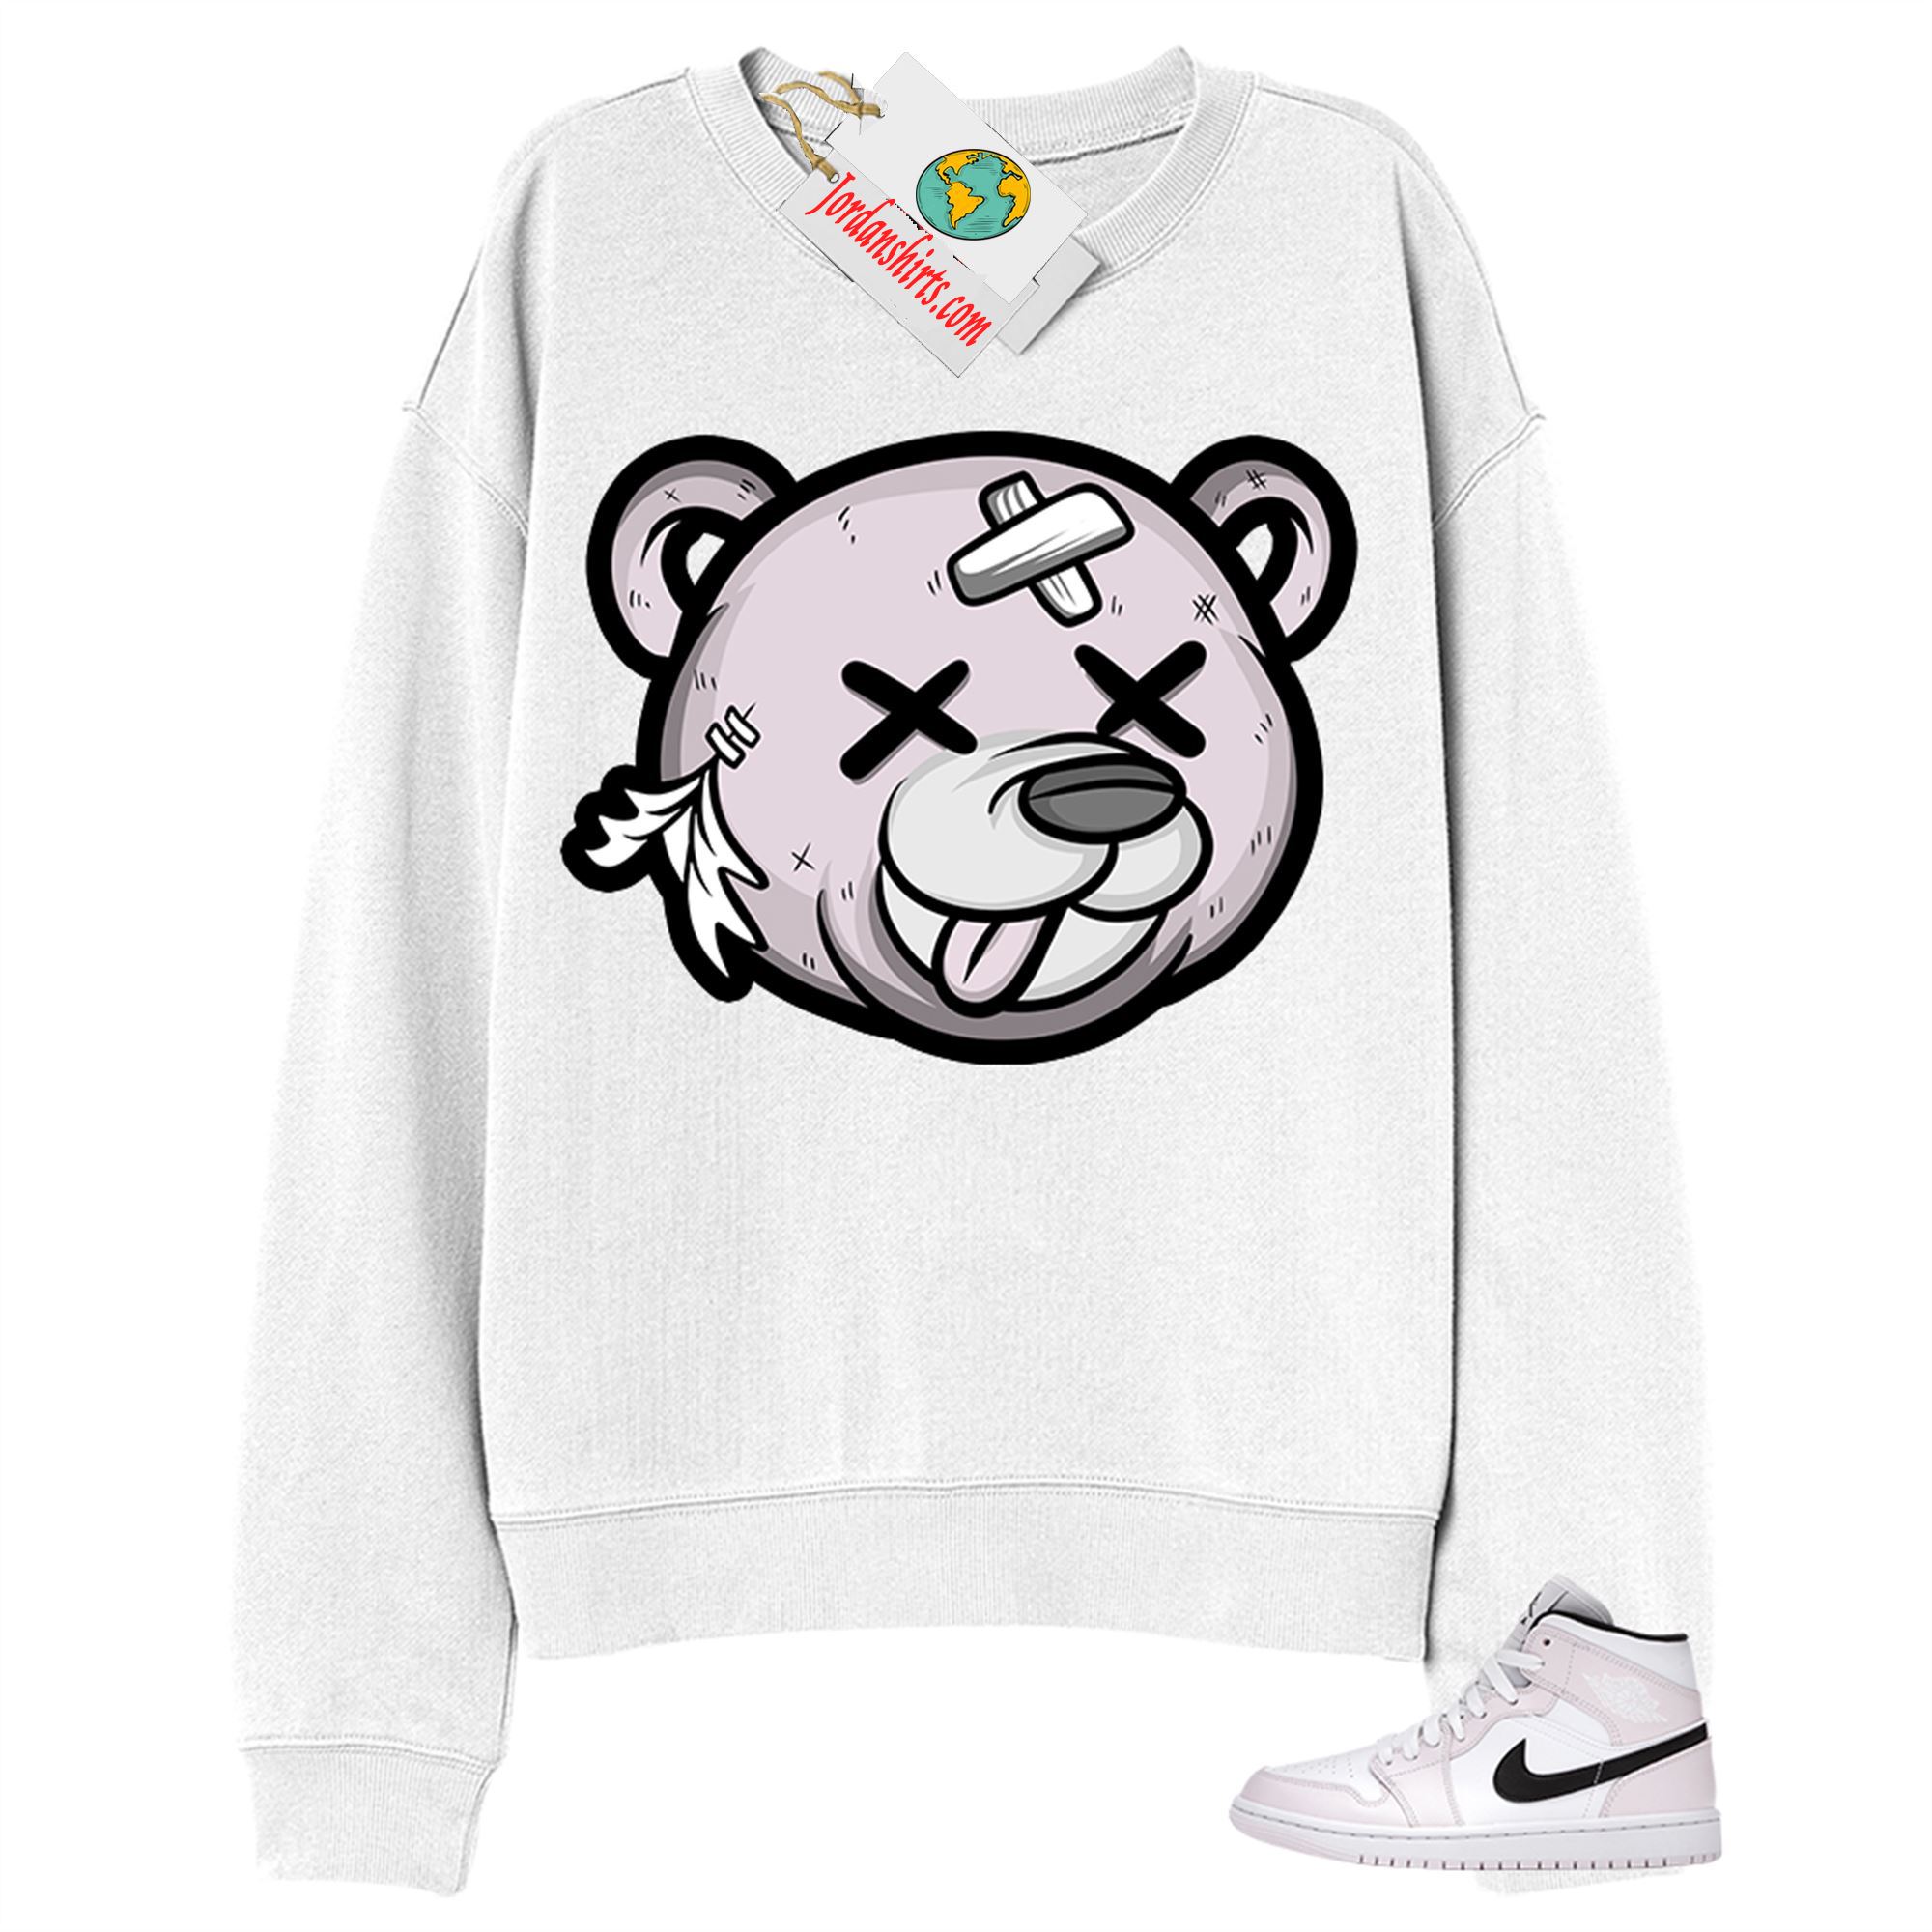 Jordan 1 Sweatshirt, Teddy Bear Head White Sweatshirt Air Jordan 1 Barely Rose 1s Size Up To 5xl